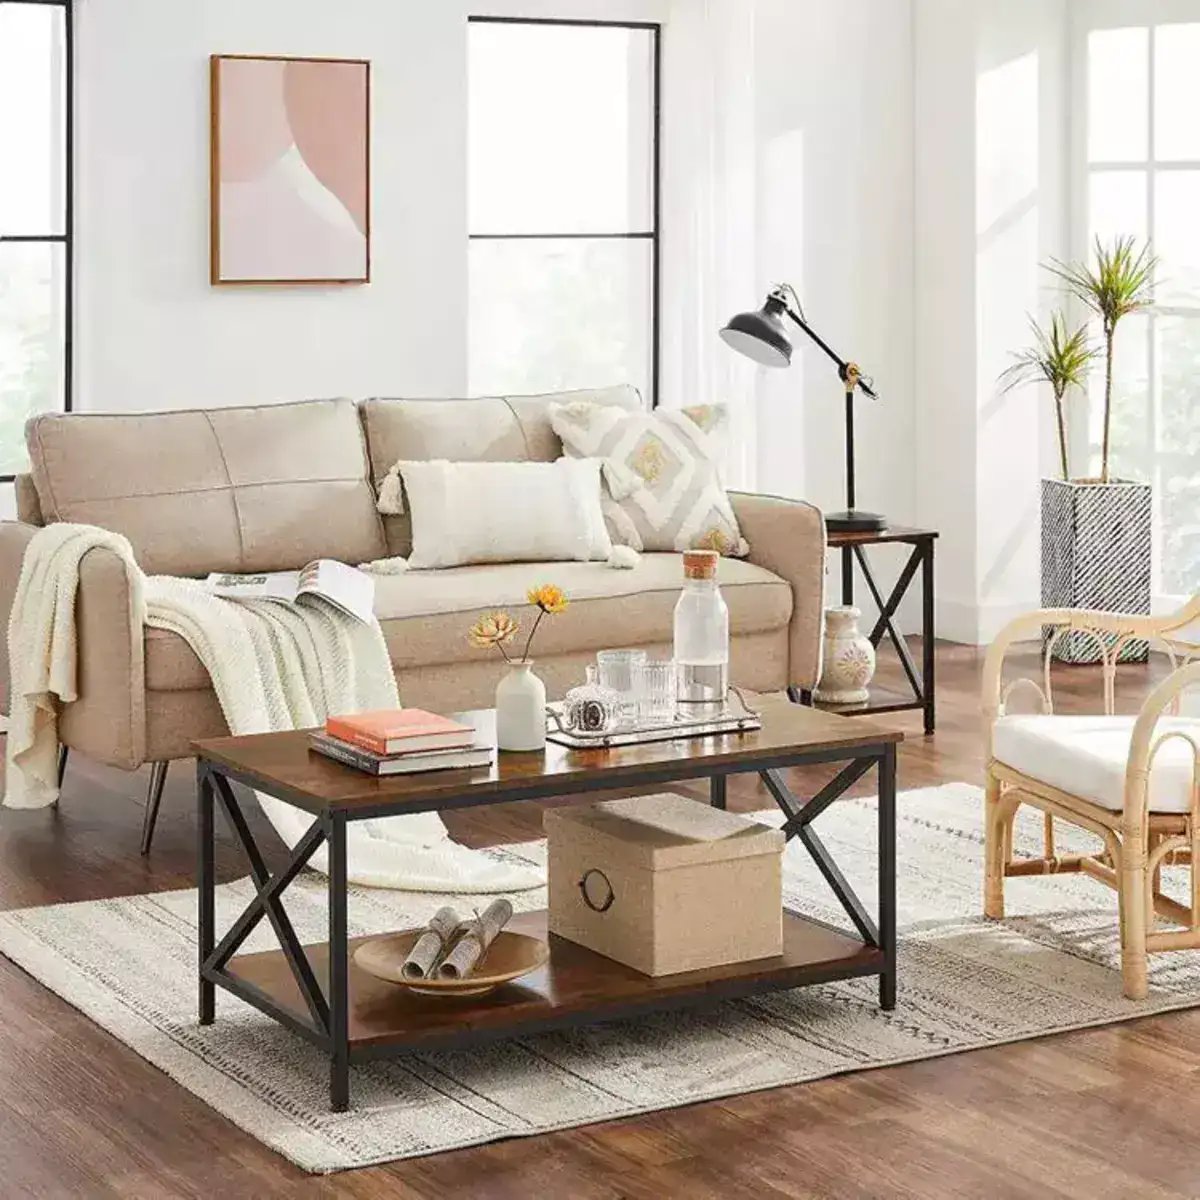 Image of VASAGLE Furniture in a modern living room